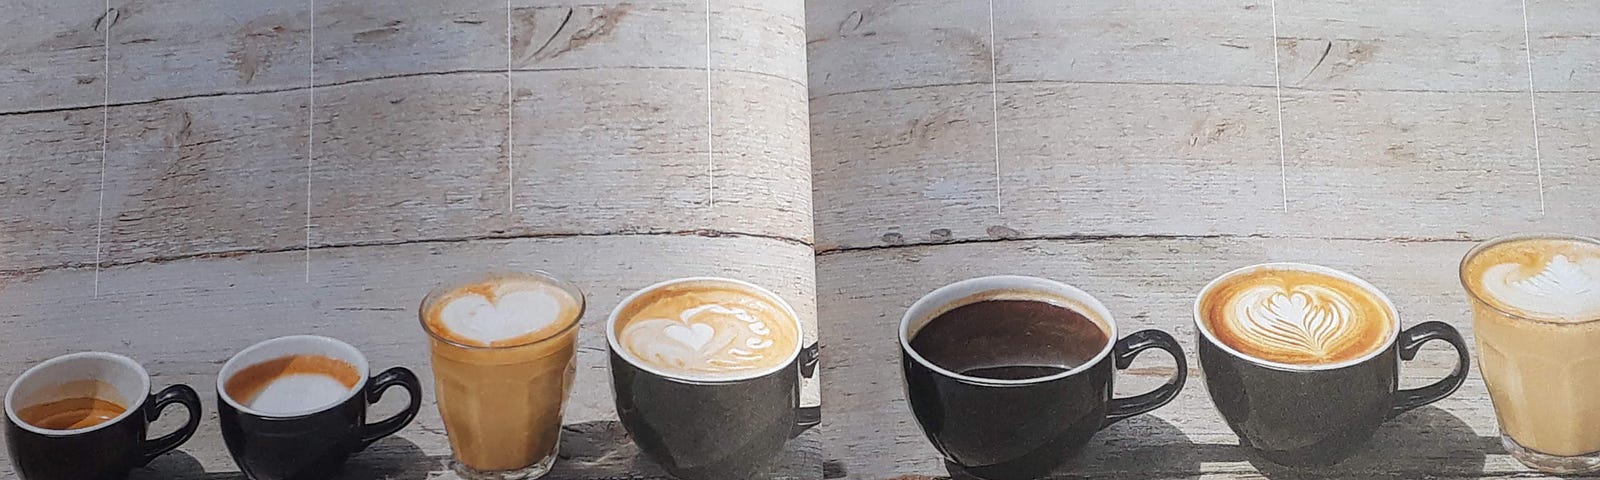 espresso-based coffee / London Coffee — Lani Kingston